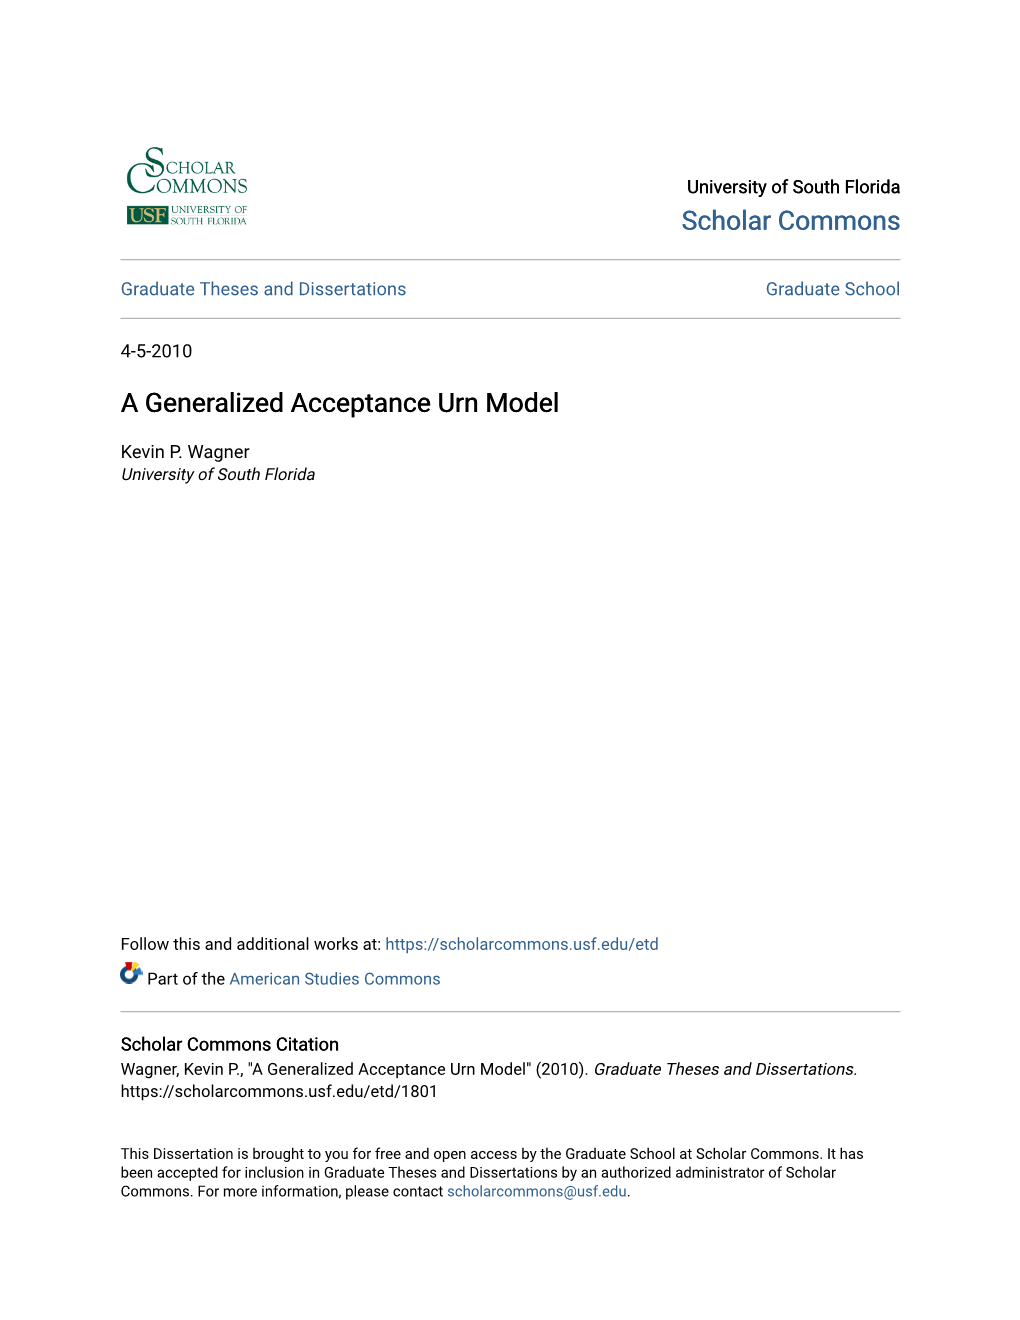 A Generalized Acceptance Urn Model